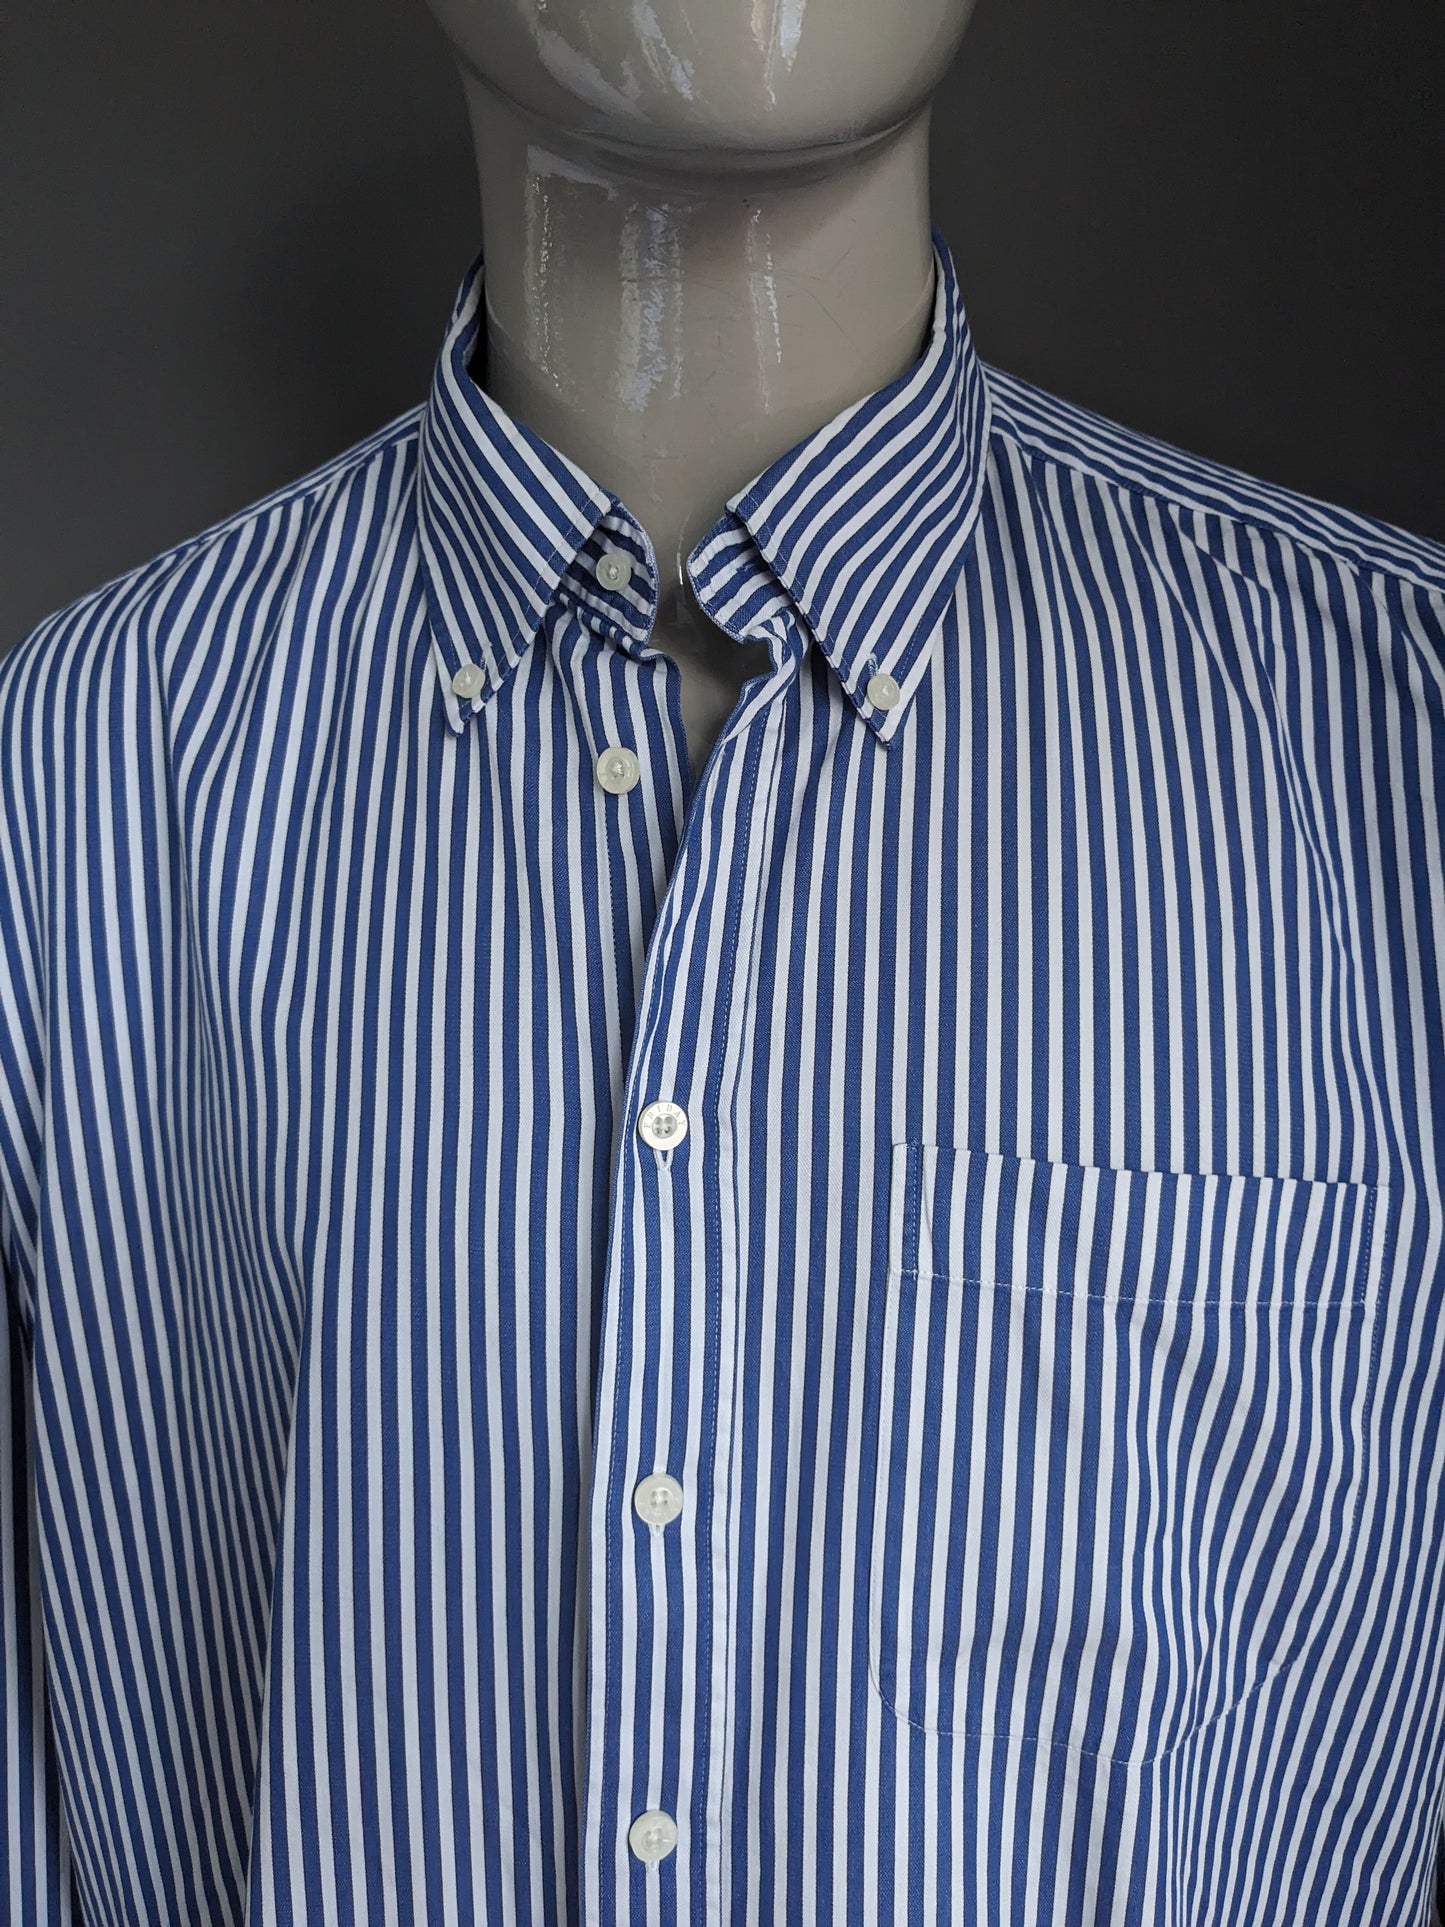 Camisa de Adam Friday. Blanco azul rayado. Tamaño 3xl / xxxl.